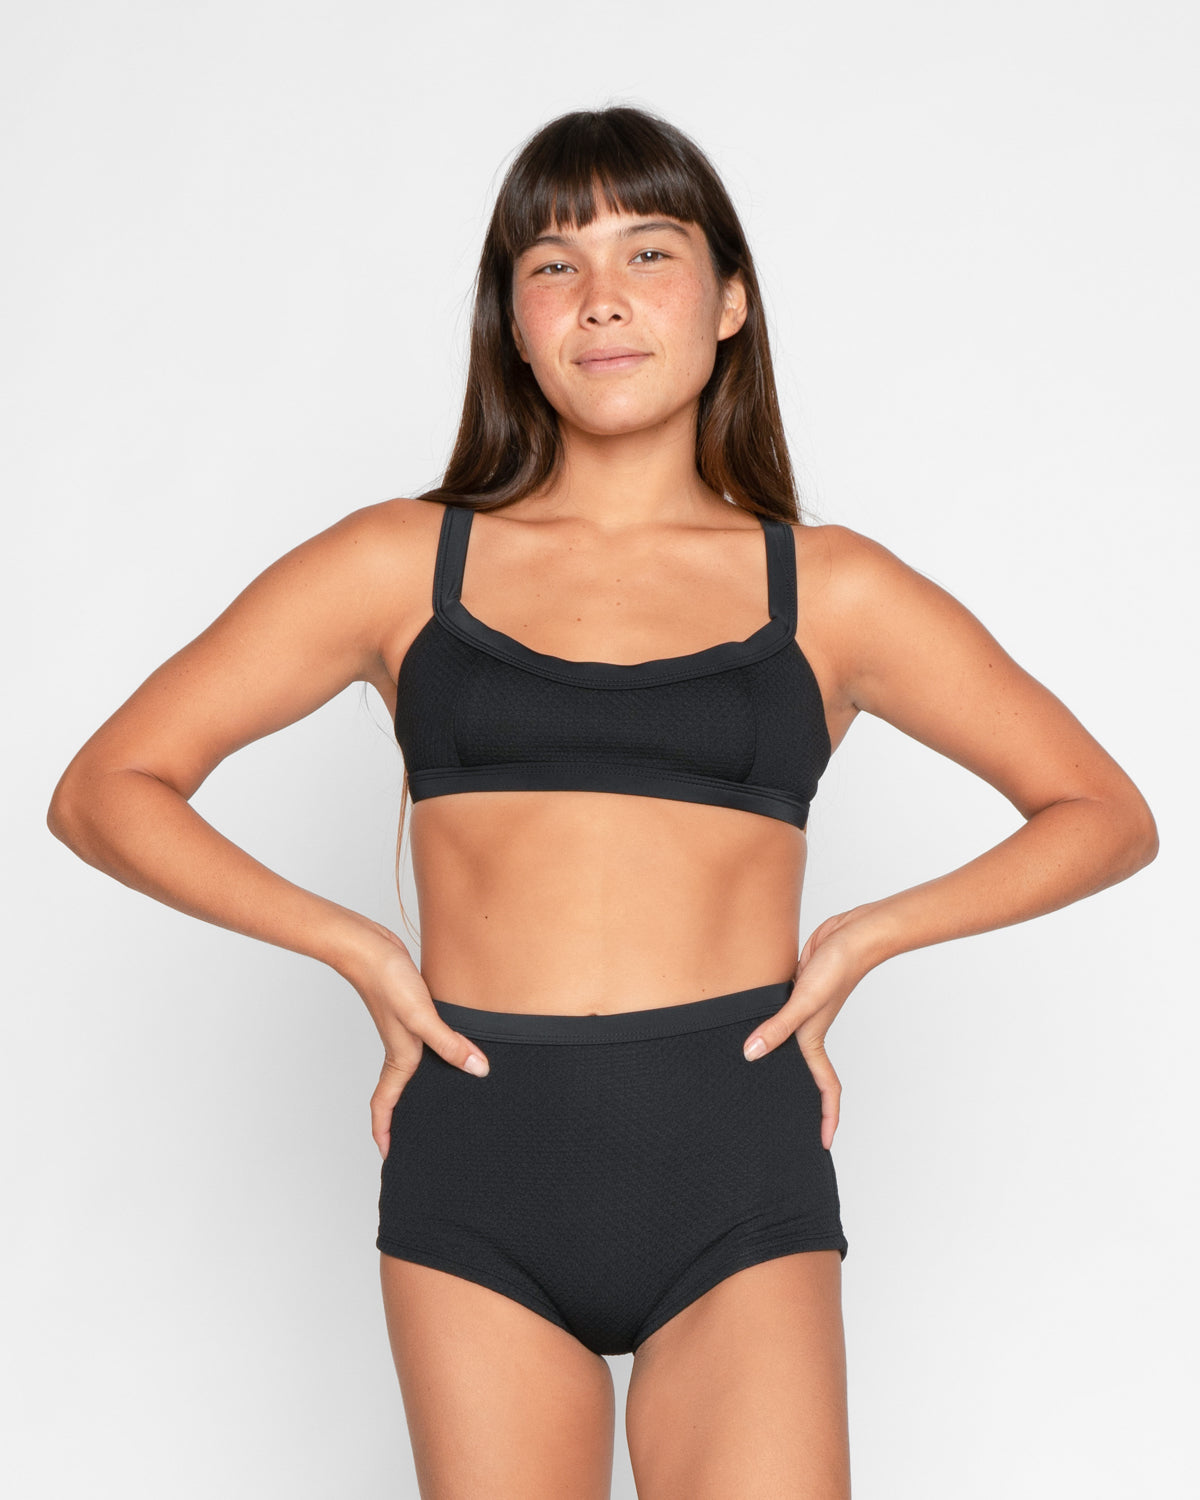 Flor Jet Black Swim Suit Bikini Top Adjustable Straps